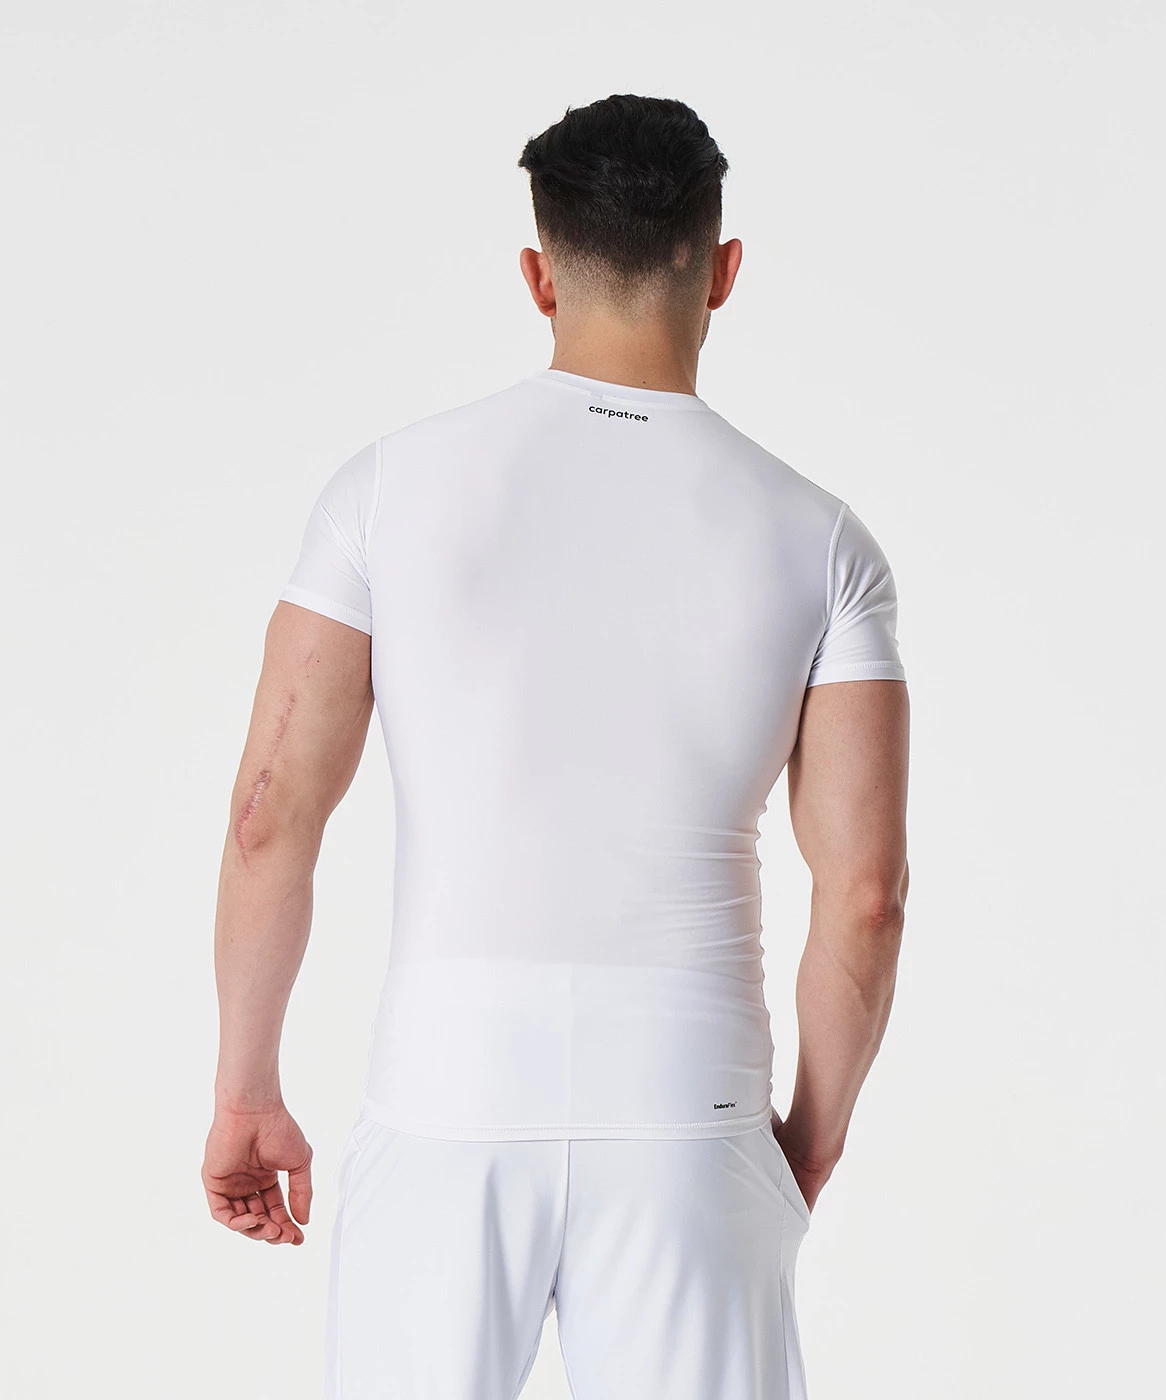 Men's White Delta Compression T-shirt - Carpatree